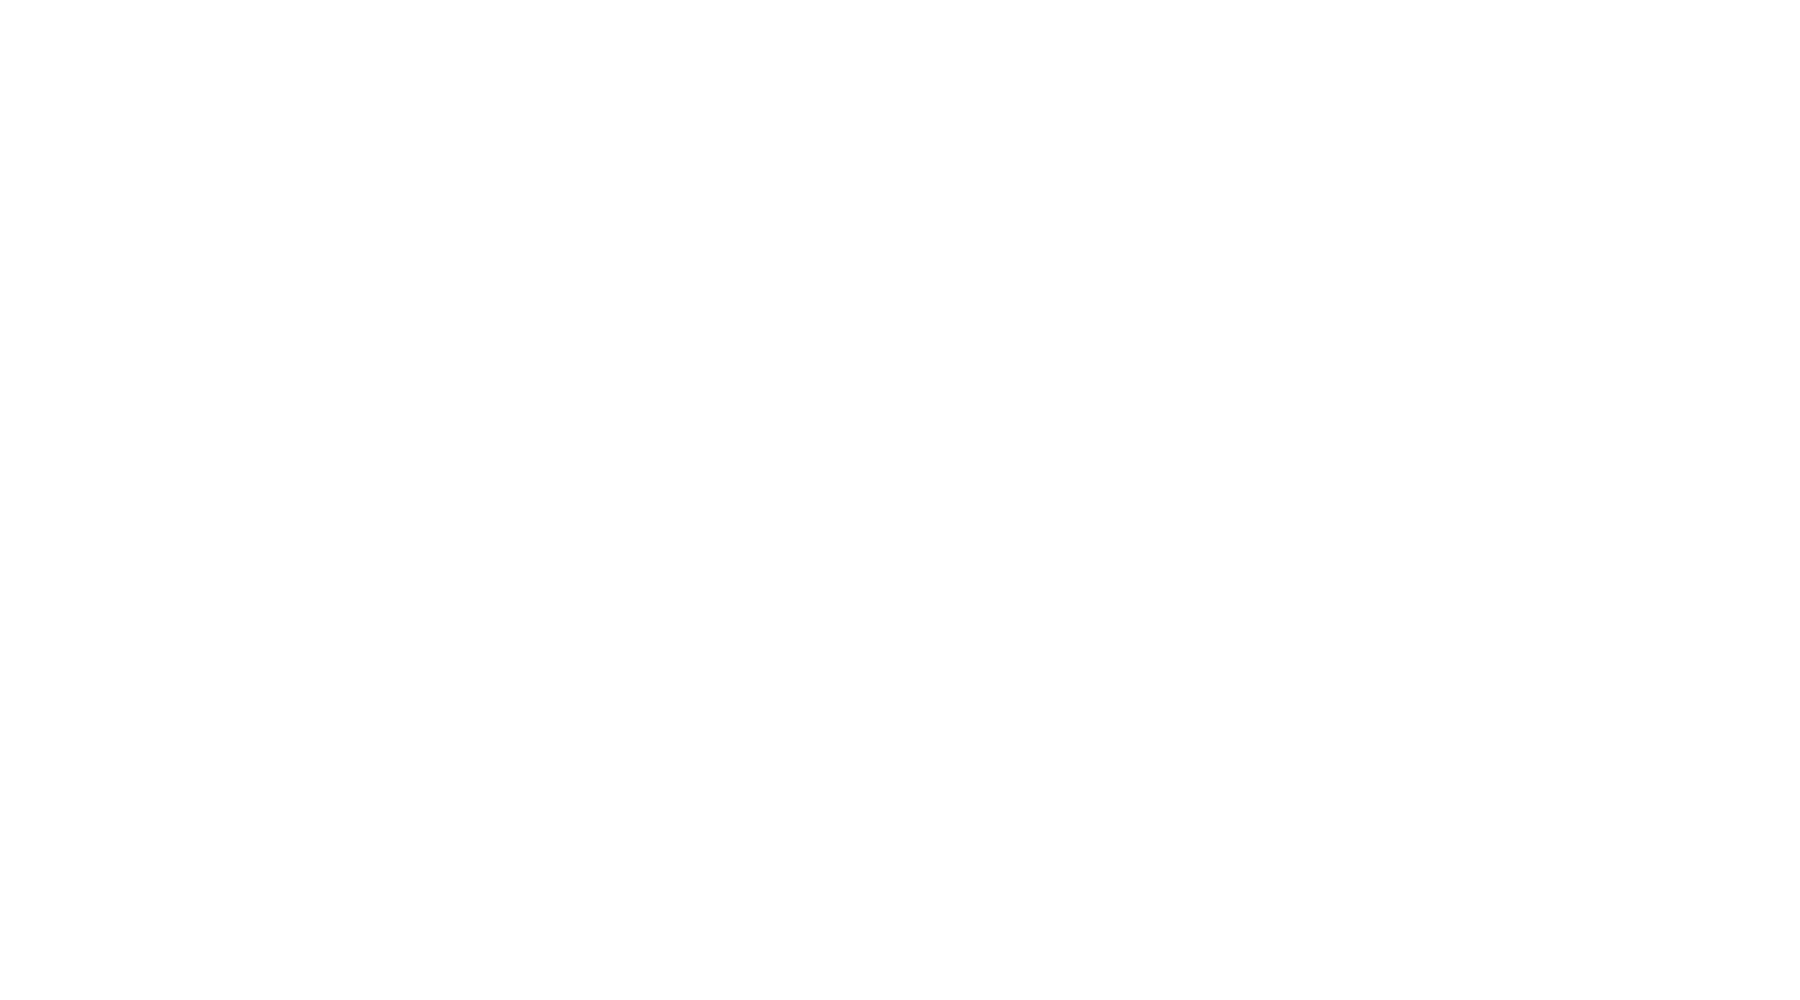 BALTA